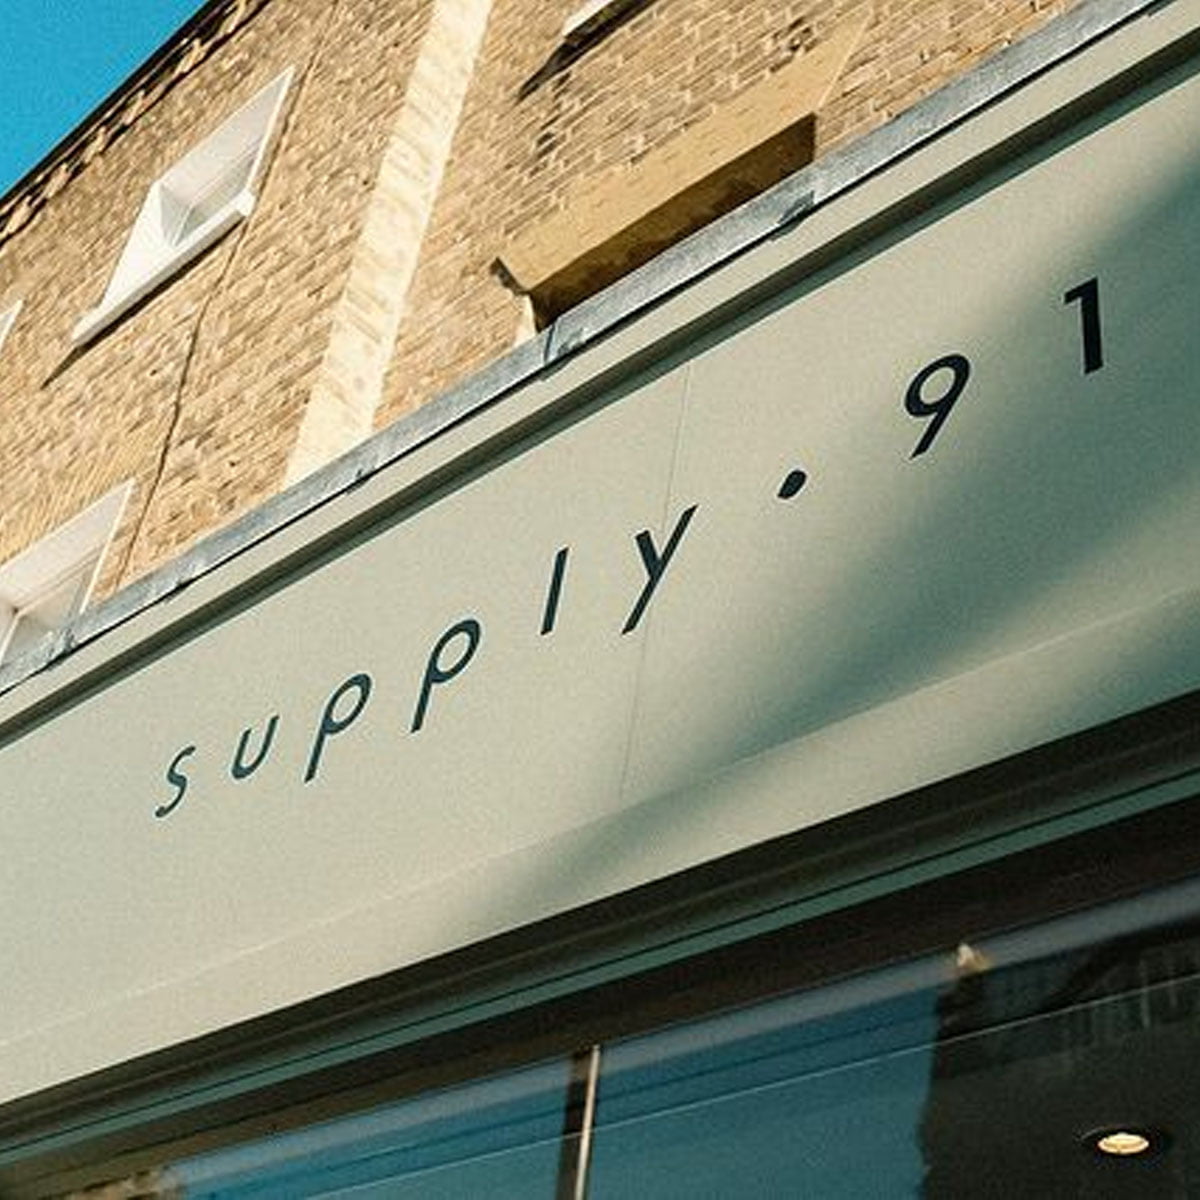 Supply 91